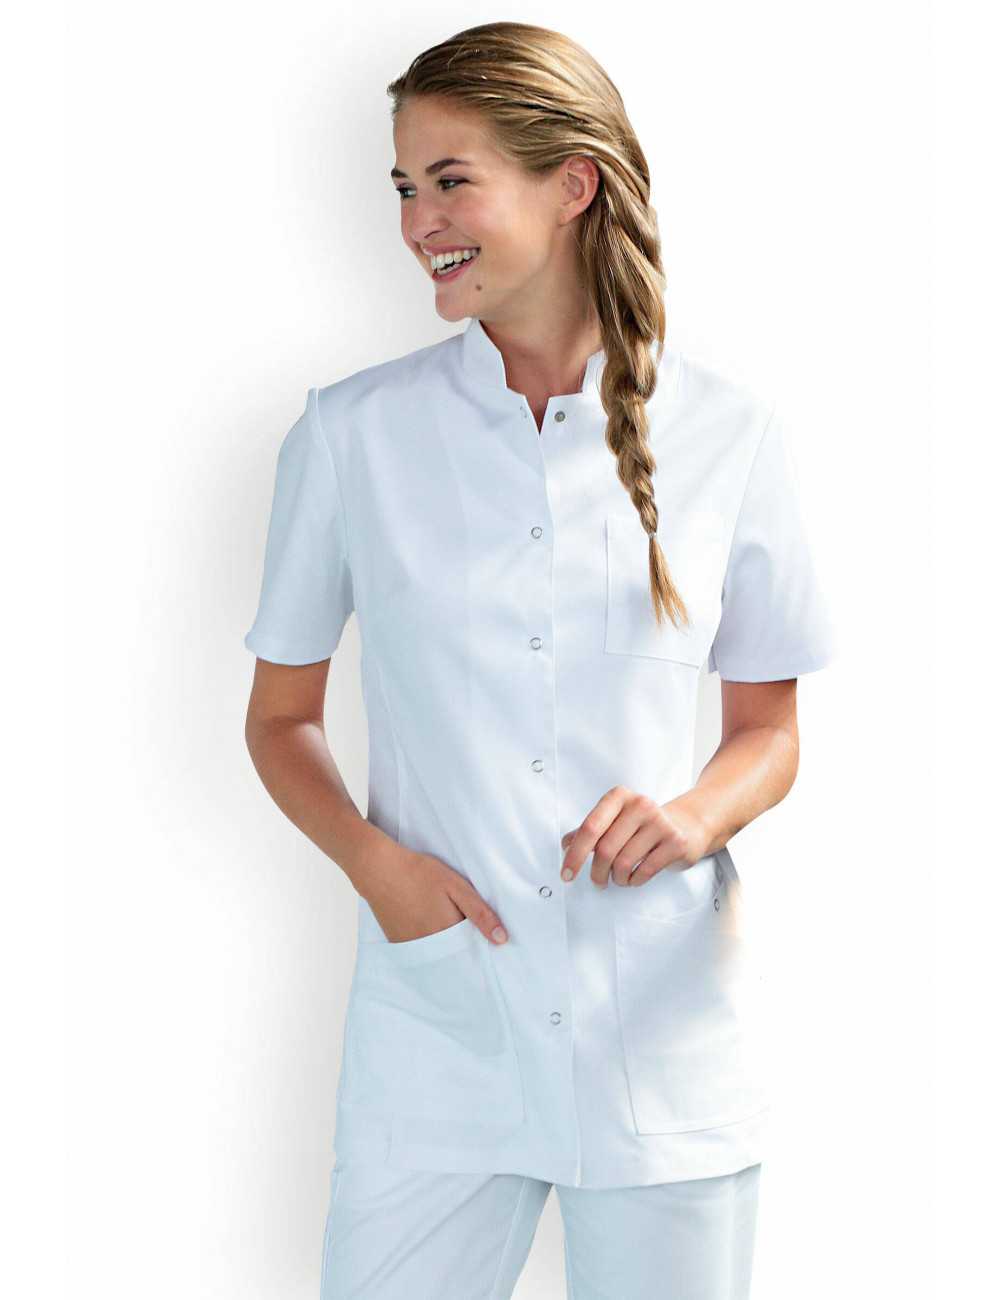 Women's medical gown "Lou", Clinic dress